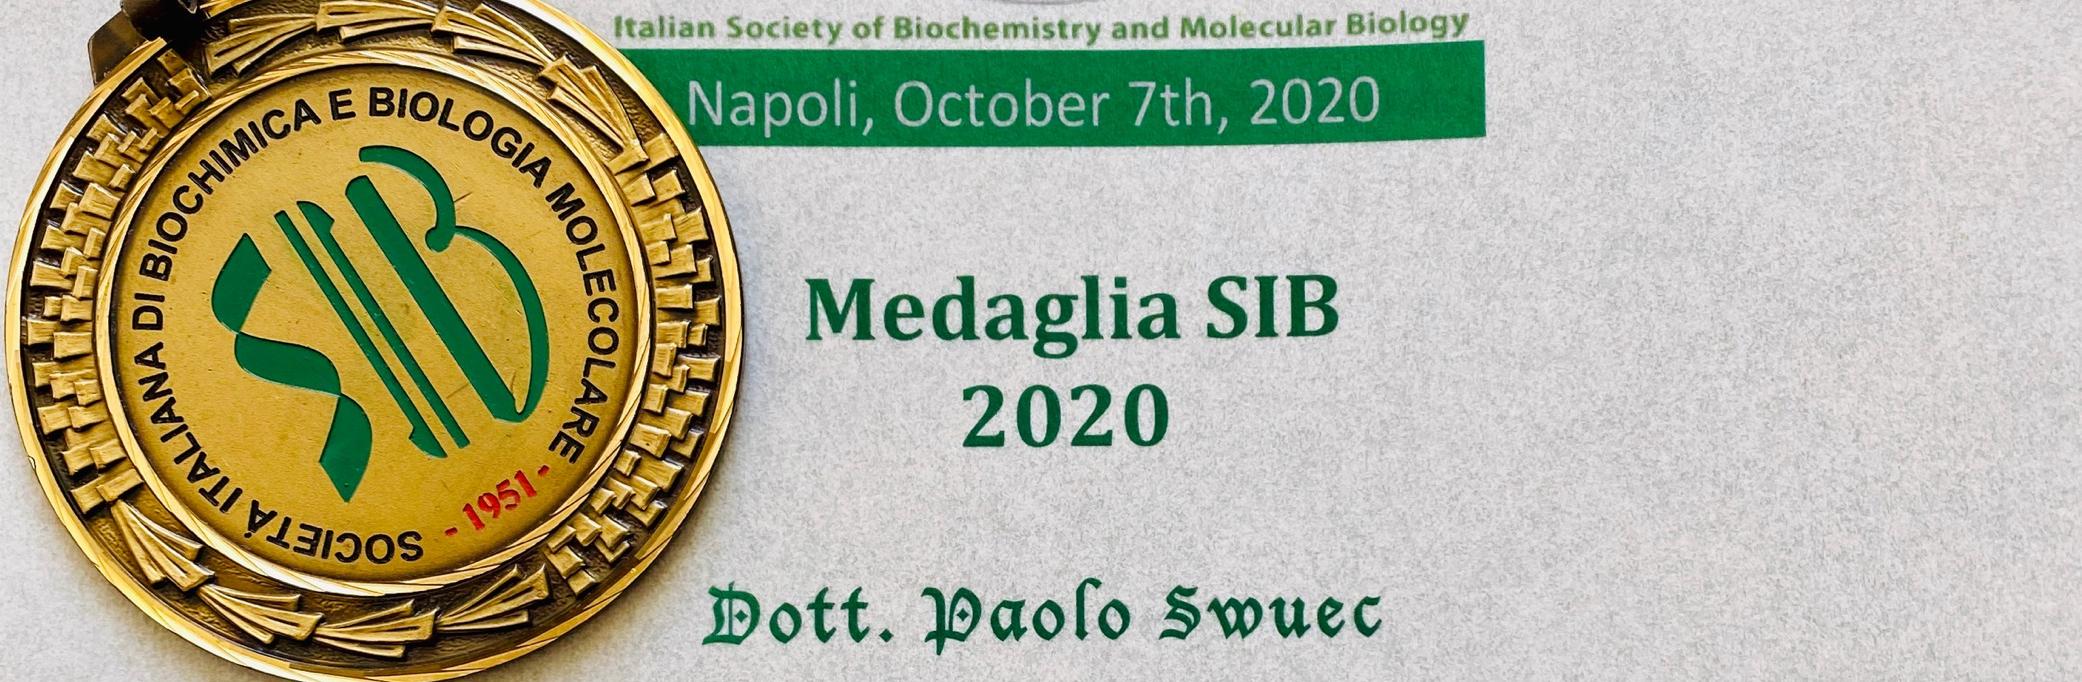 Paolo Swuec wins Italian Society of Biochemistry (SIB) Medal 2020